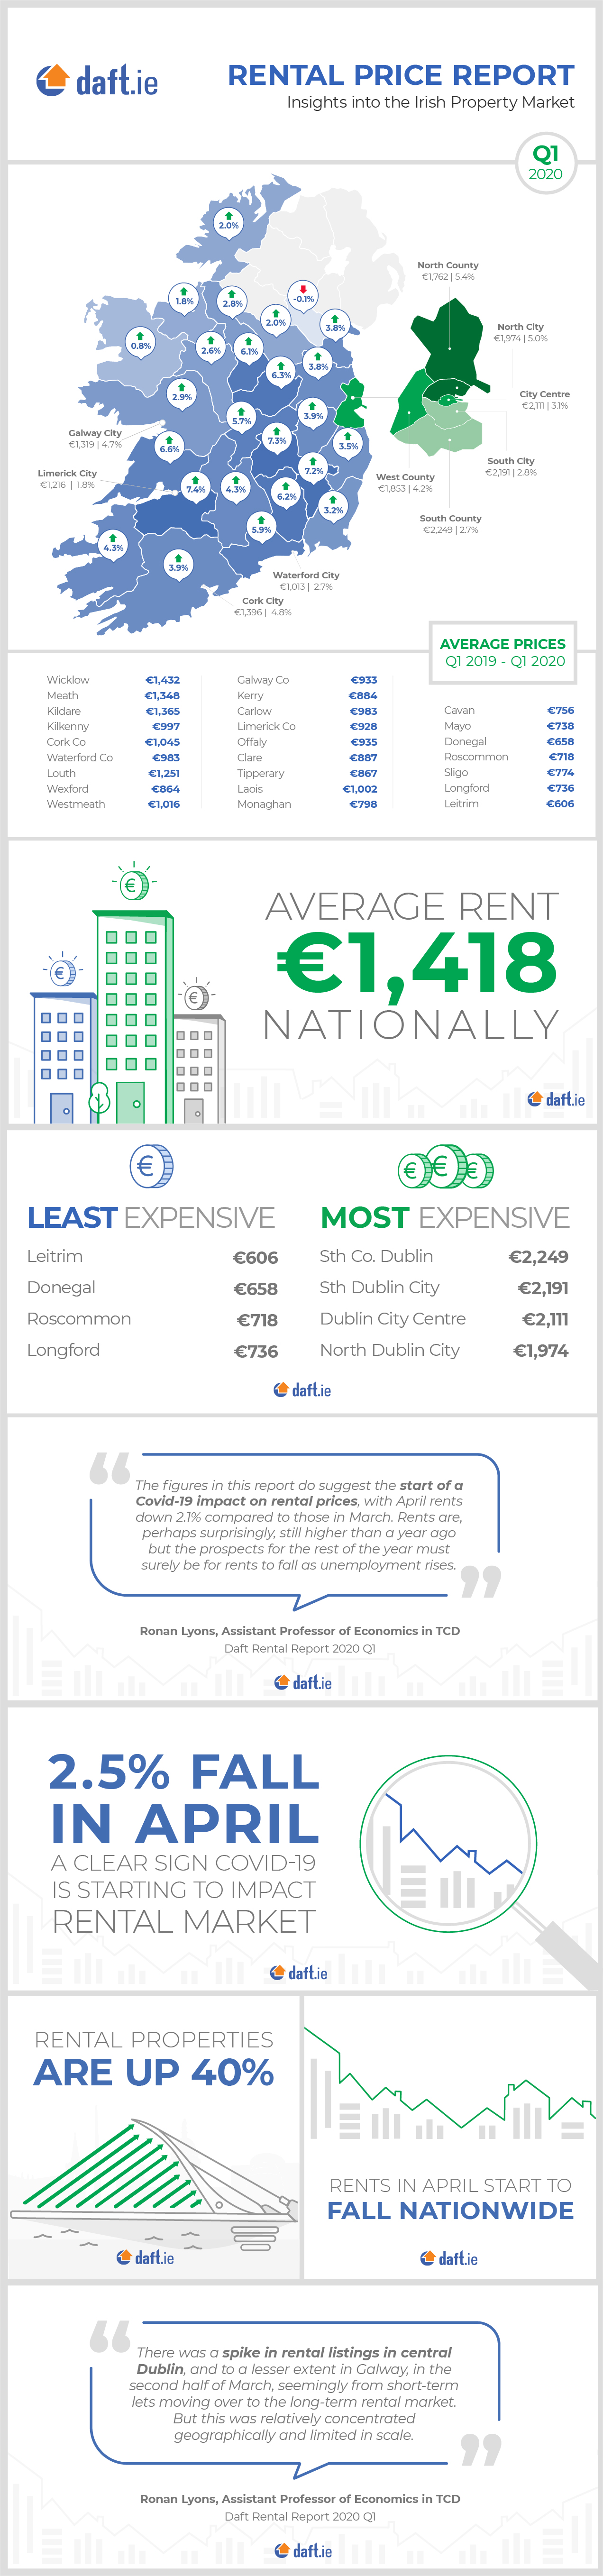 Daft.ie Rental Report: Q1 2020 Infographic